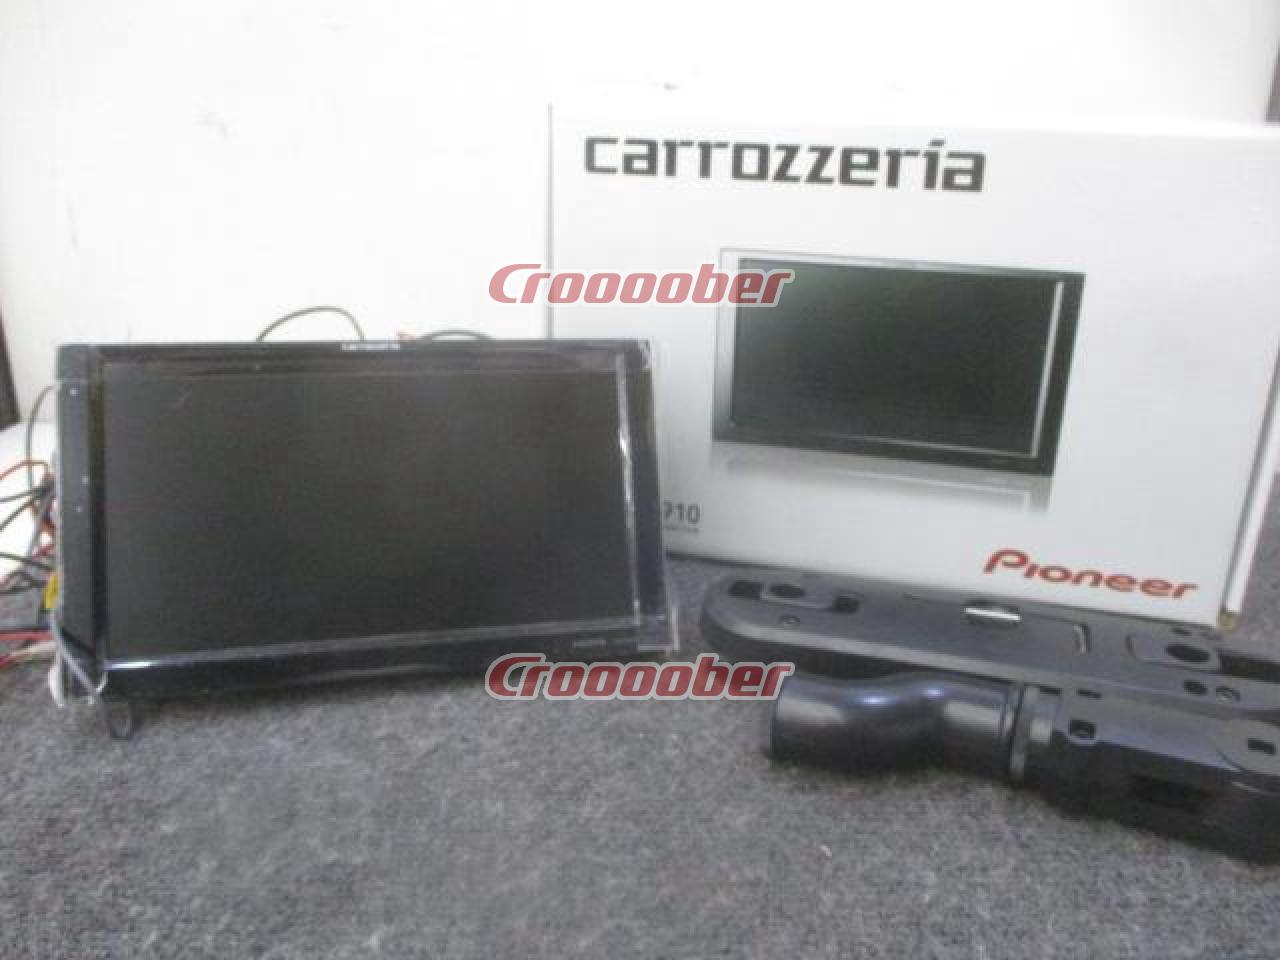 Carrozzeria TVM-W910 | Other Monitors | Croooober